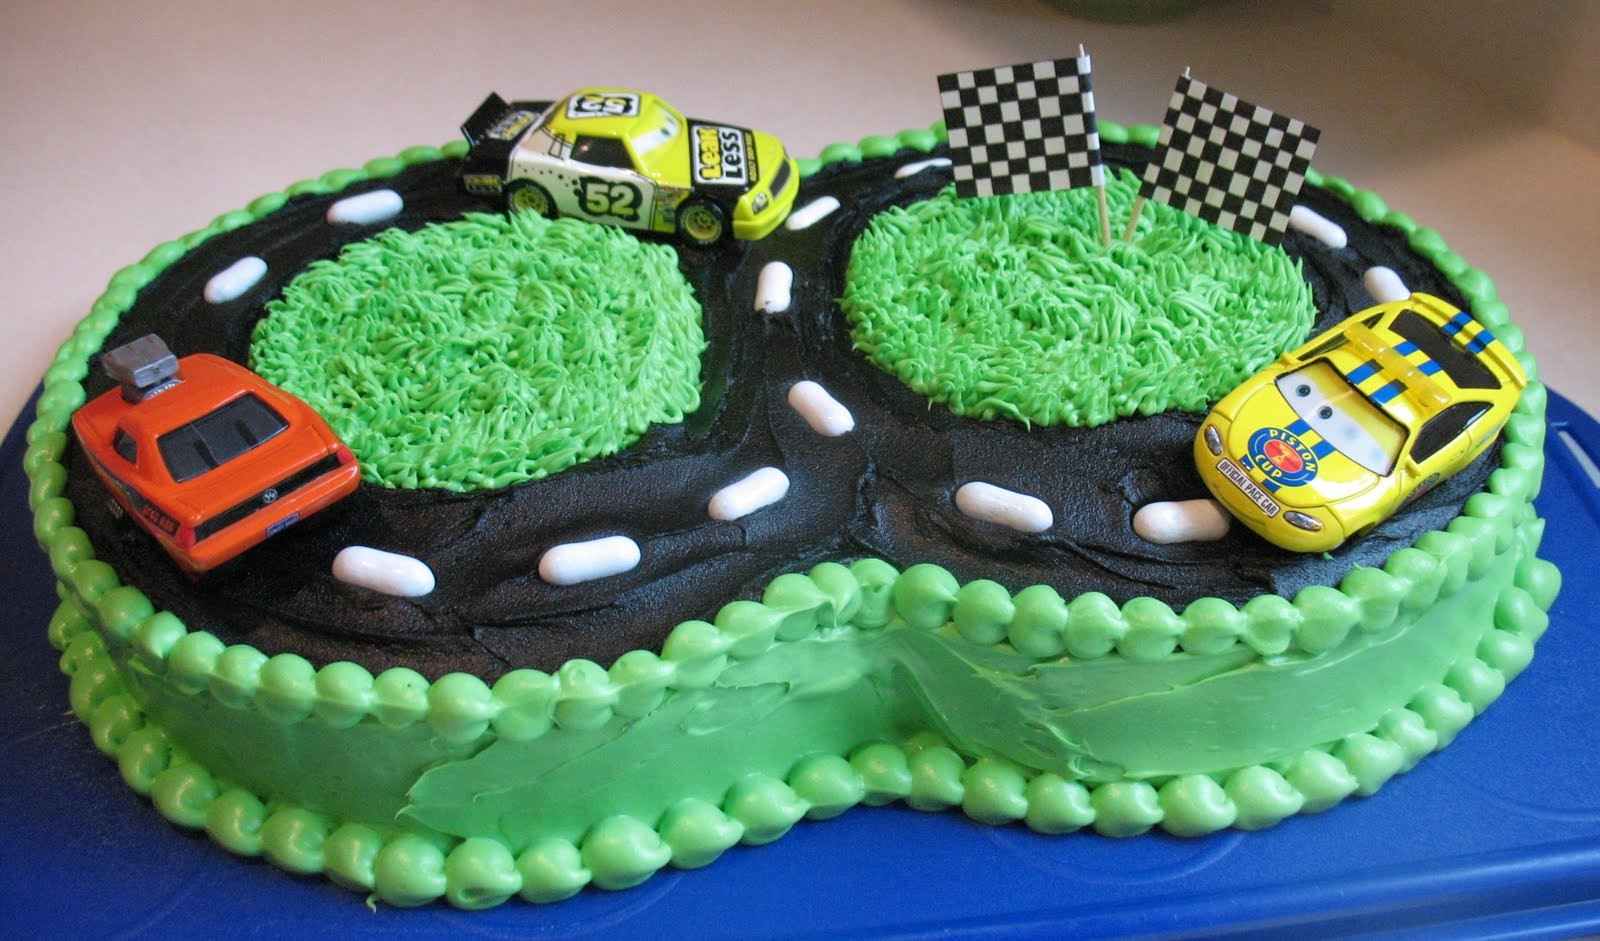 Walmart Kids Birthday Cake
 Home Tips Kids Will Have A Fun With Walmart Cake Designs